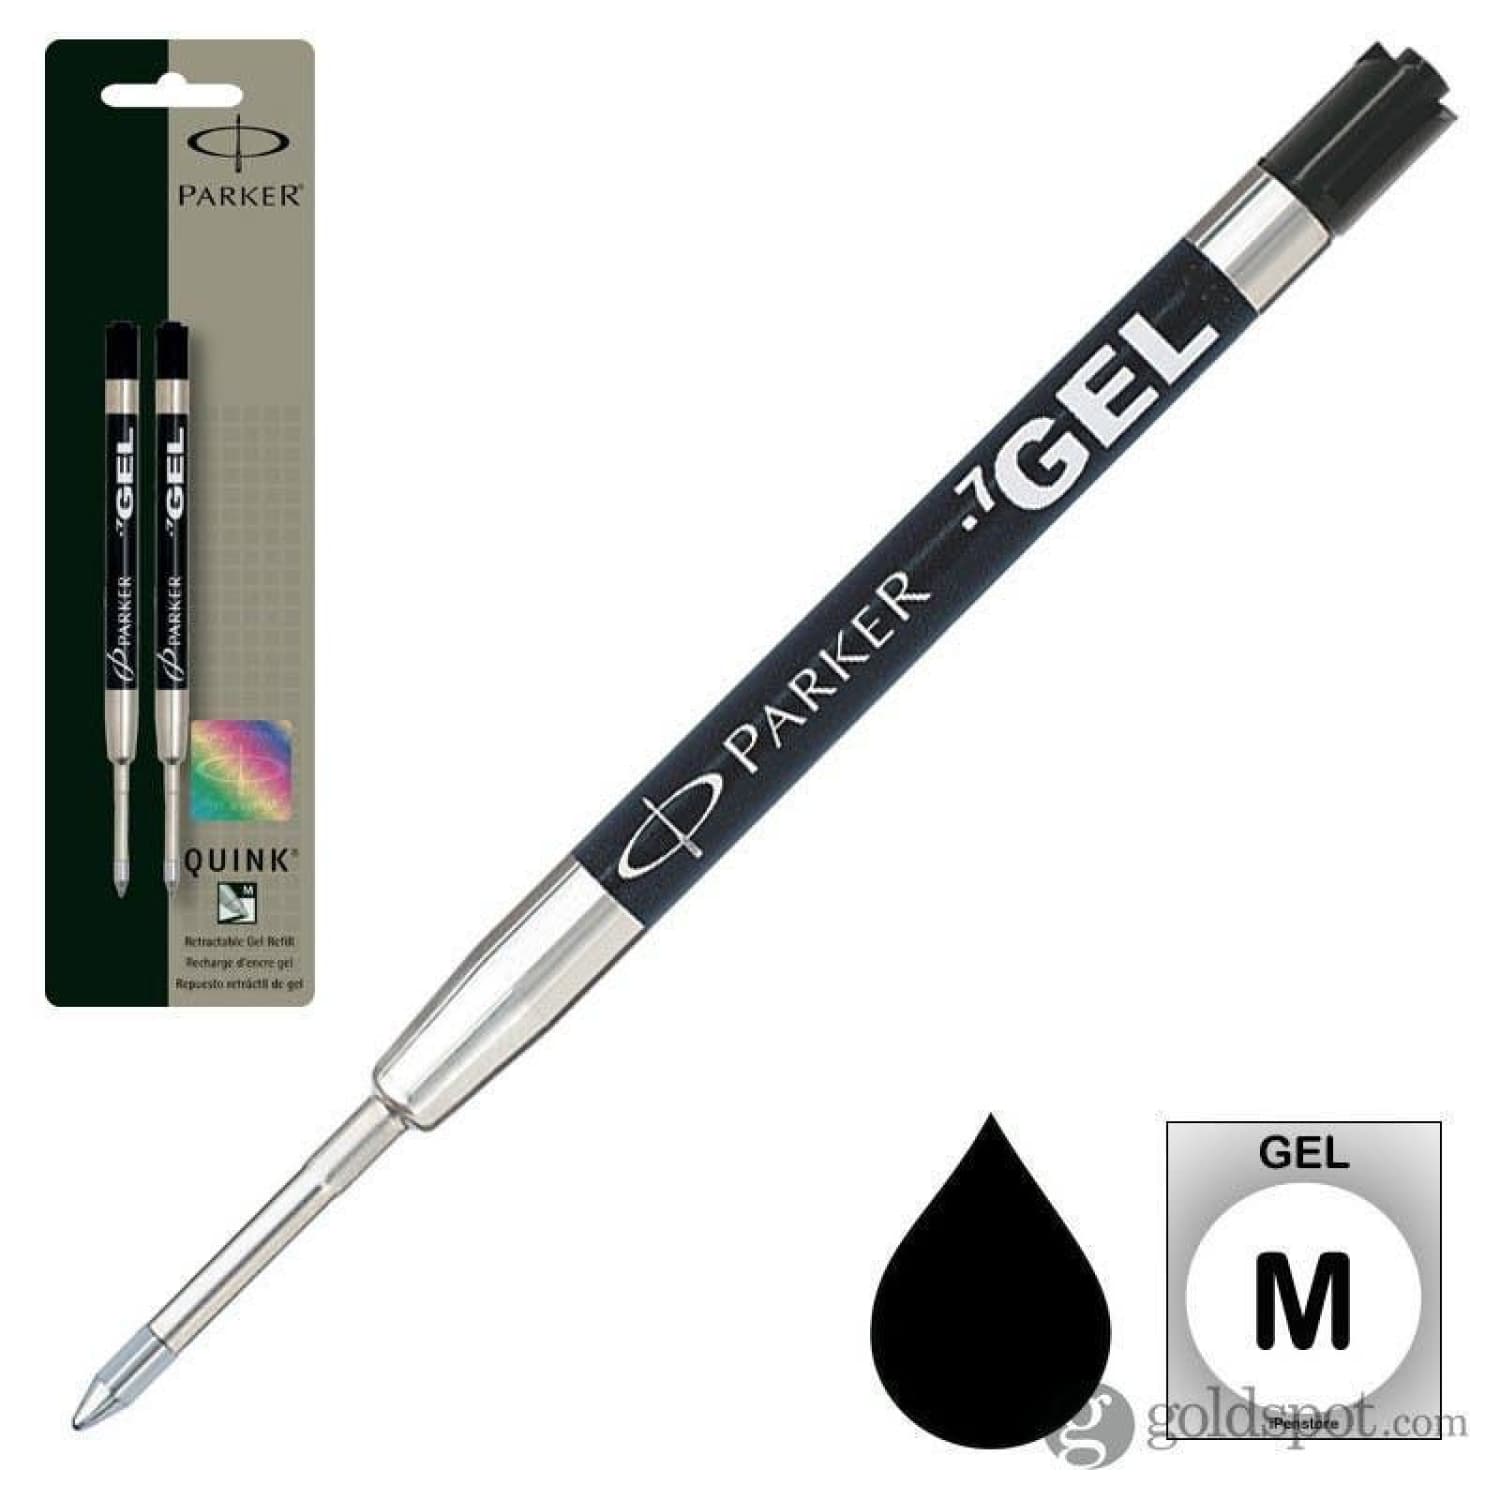 Parker Gel Ballpoint Pen Refill in Black - Medium Point - Pack of 2 - 30525